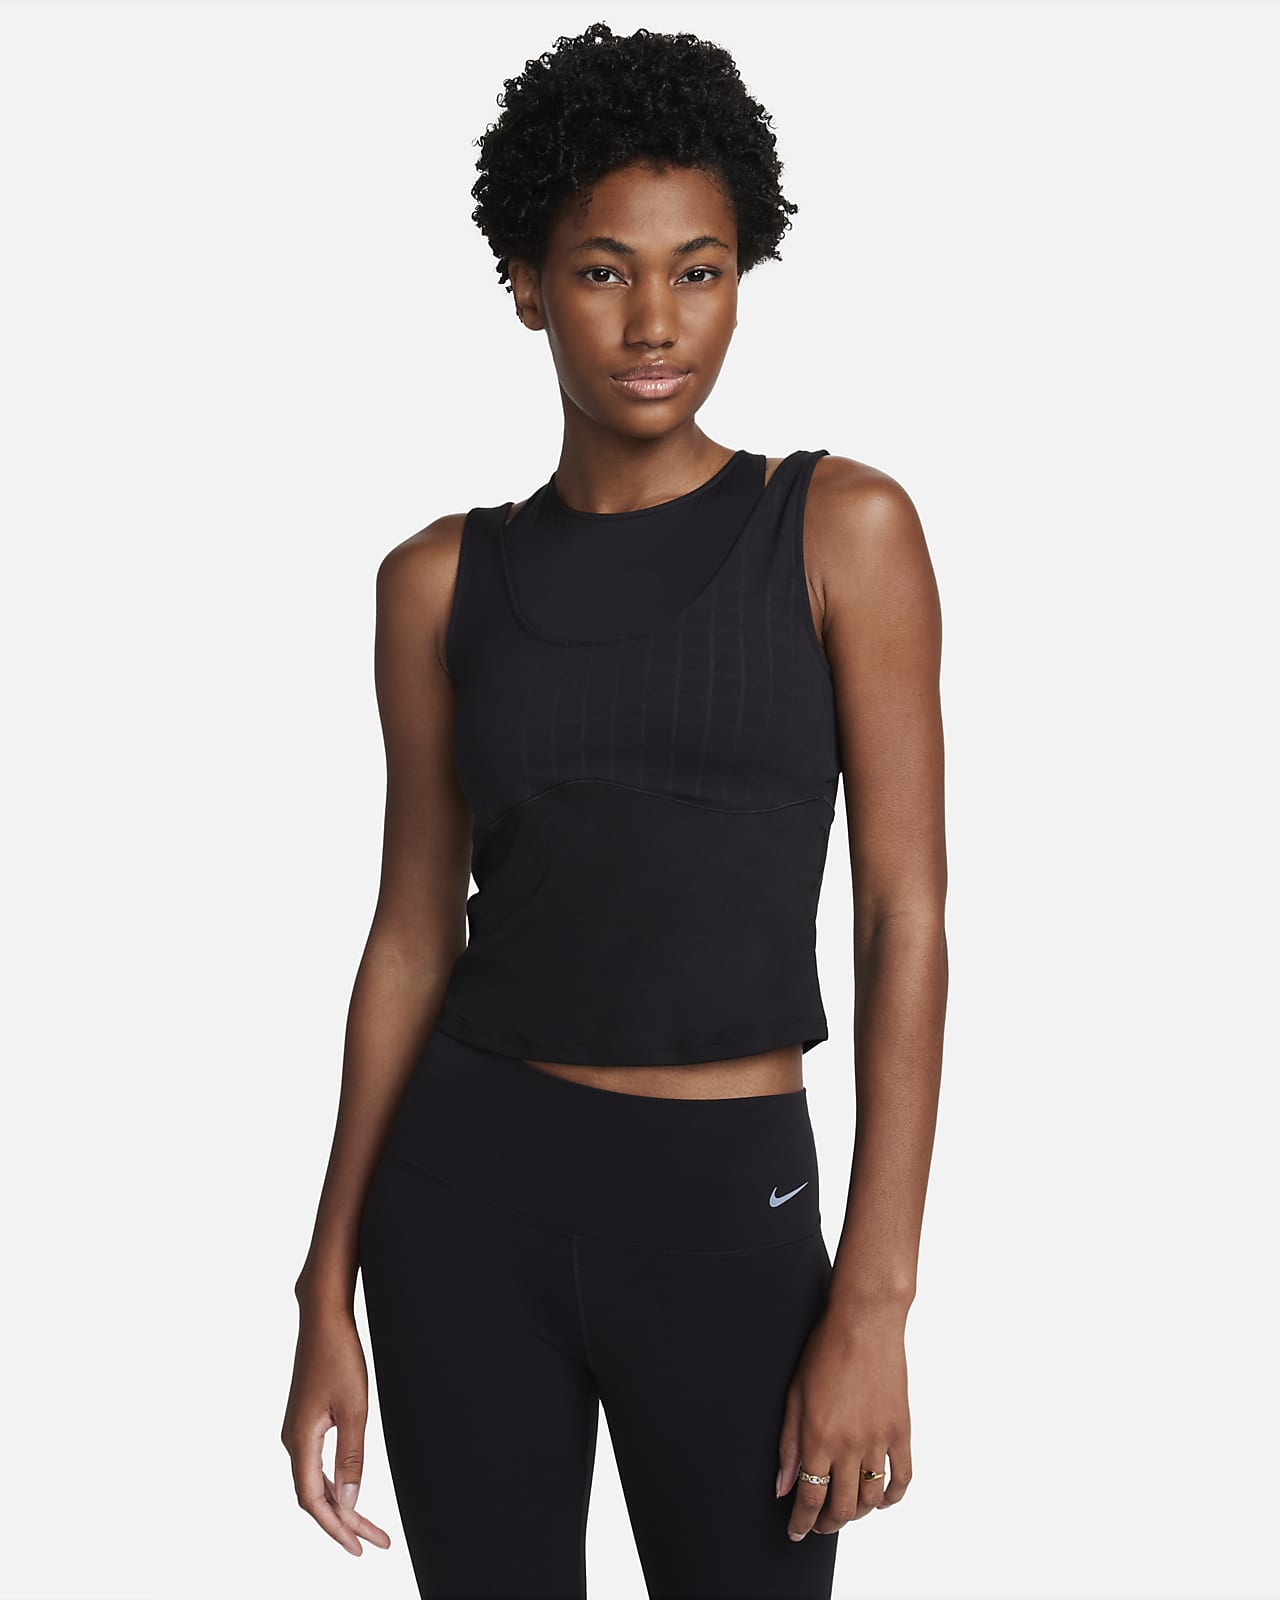 Nike Yoga Training Top Women's Size Medium, Dri Fit Shirt, Black